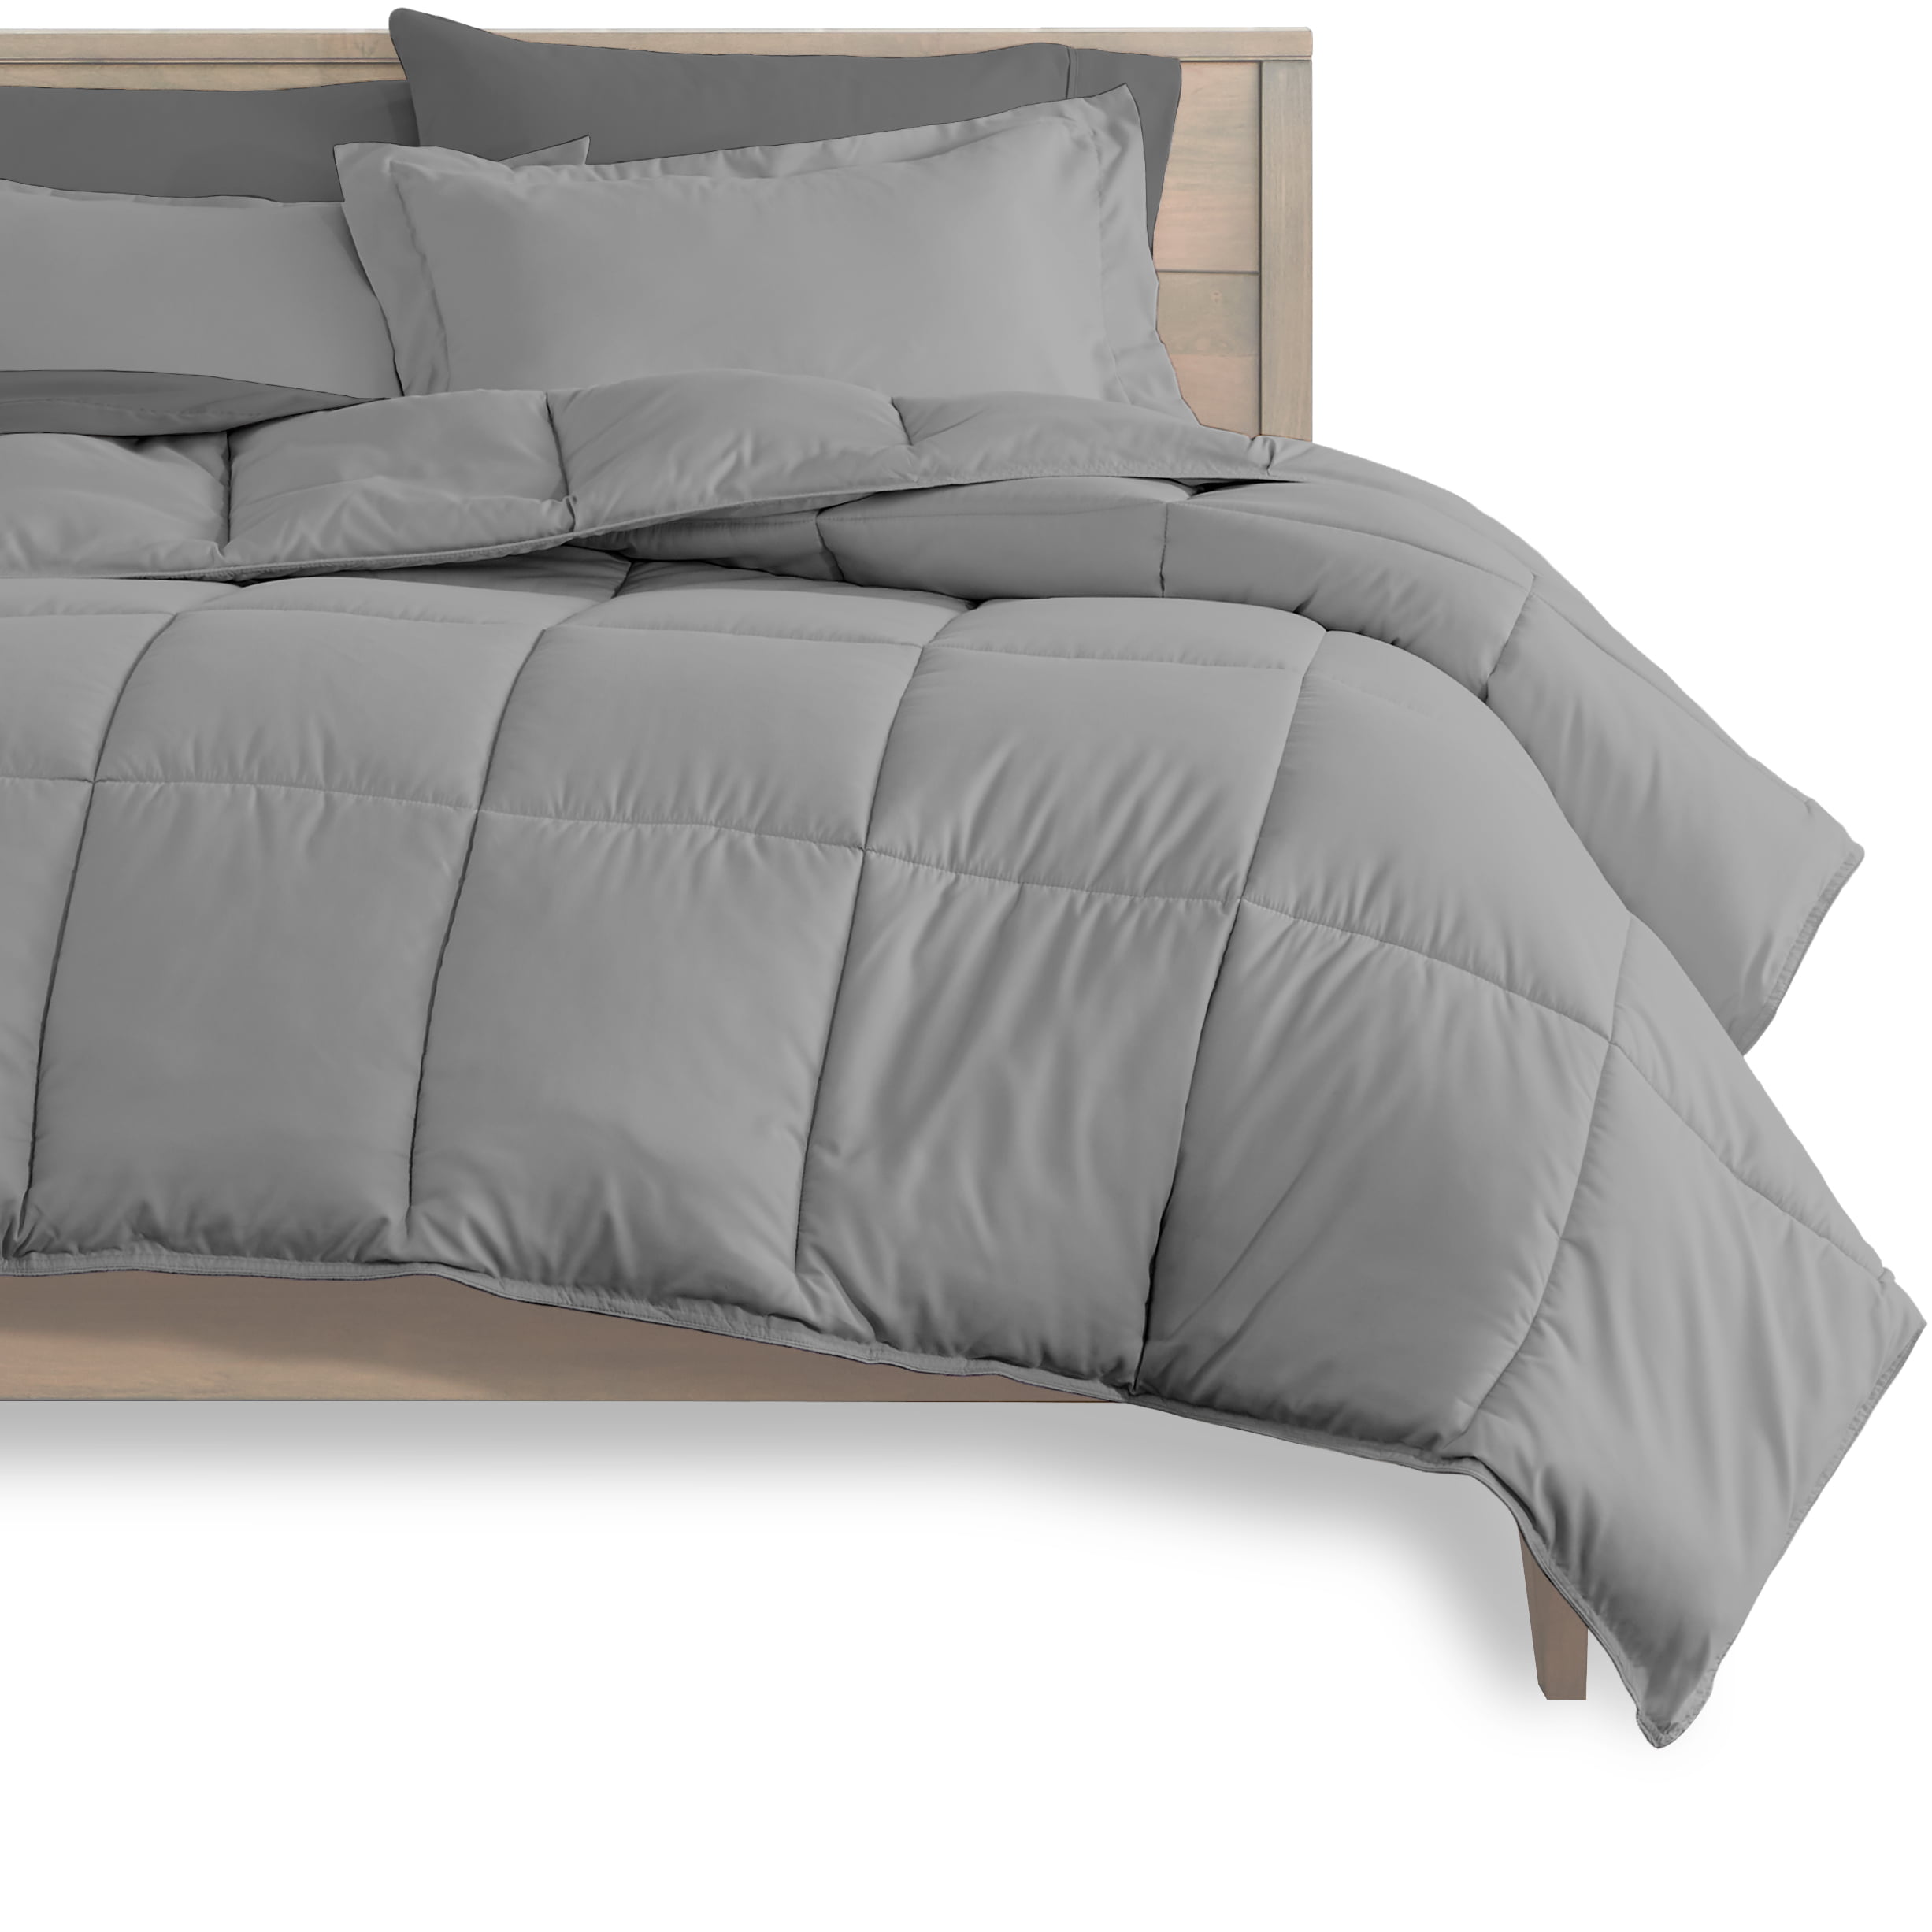 Cal King Comforter Set, Gray California King Bedding Sets